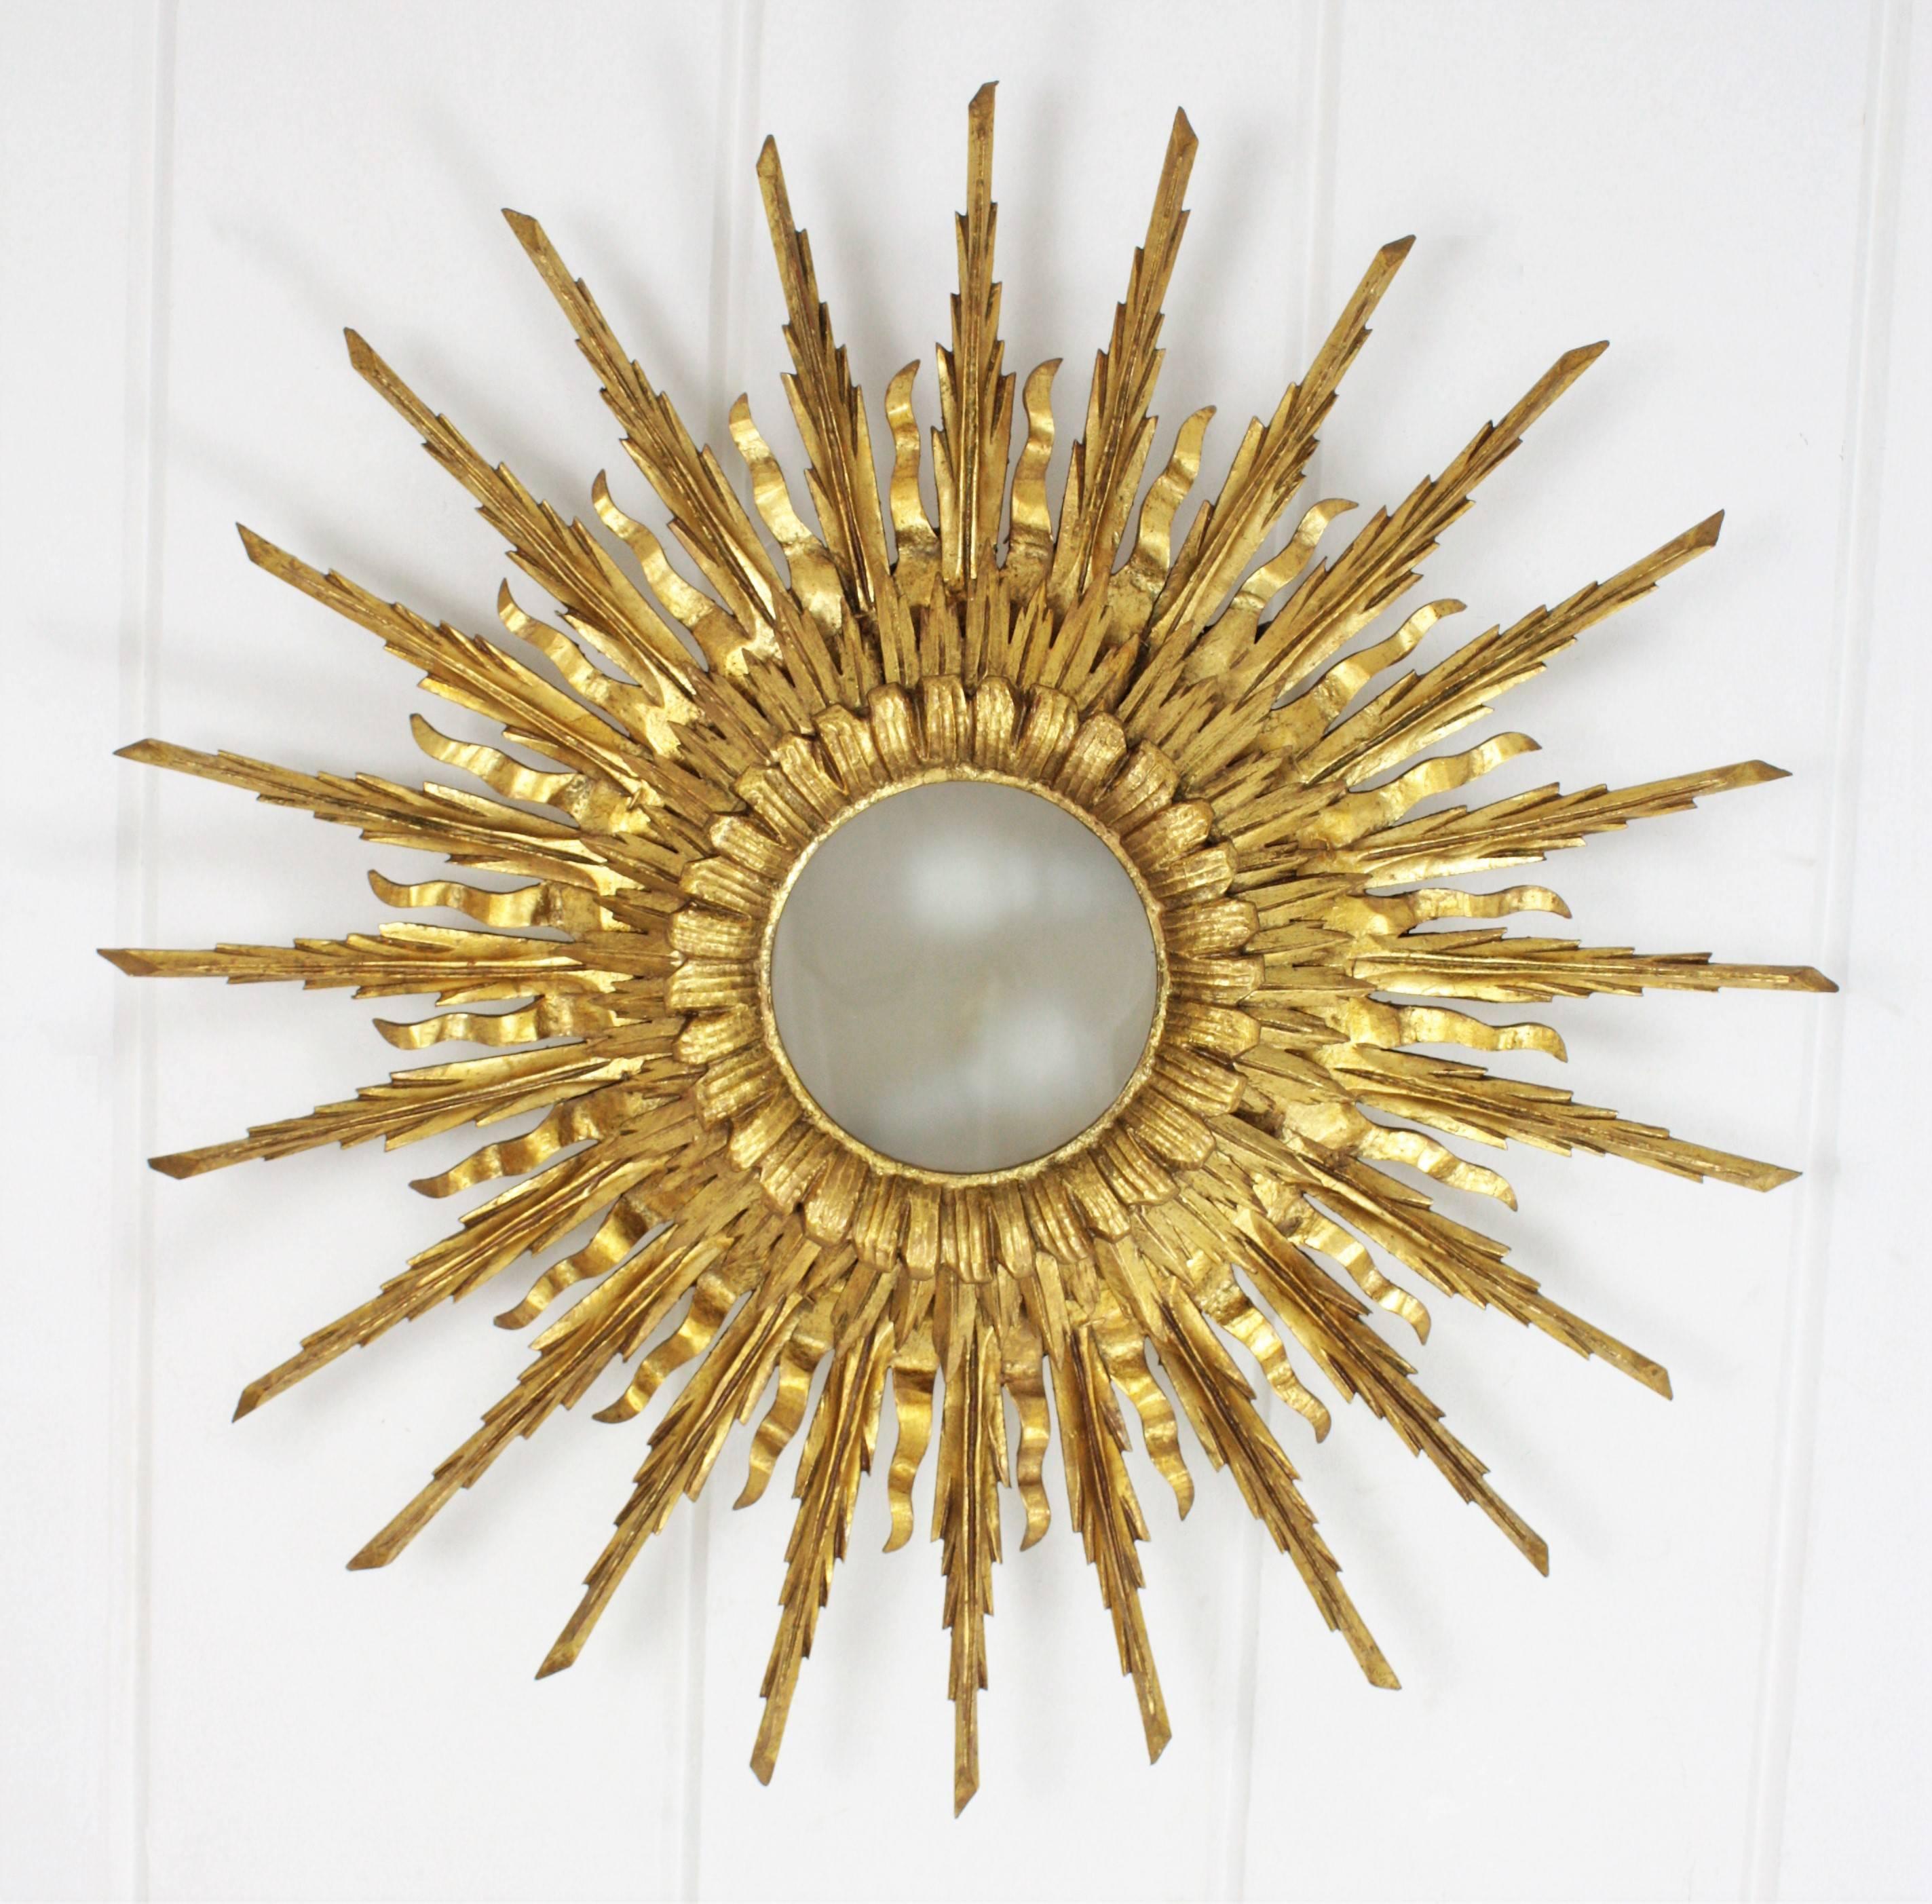 Spanish Giant 1940s Baroque Gold Leaf Giltwood Sunburst Ceiling Light Fixture or Mirror